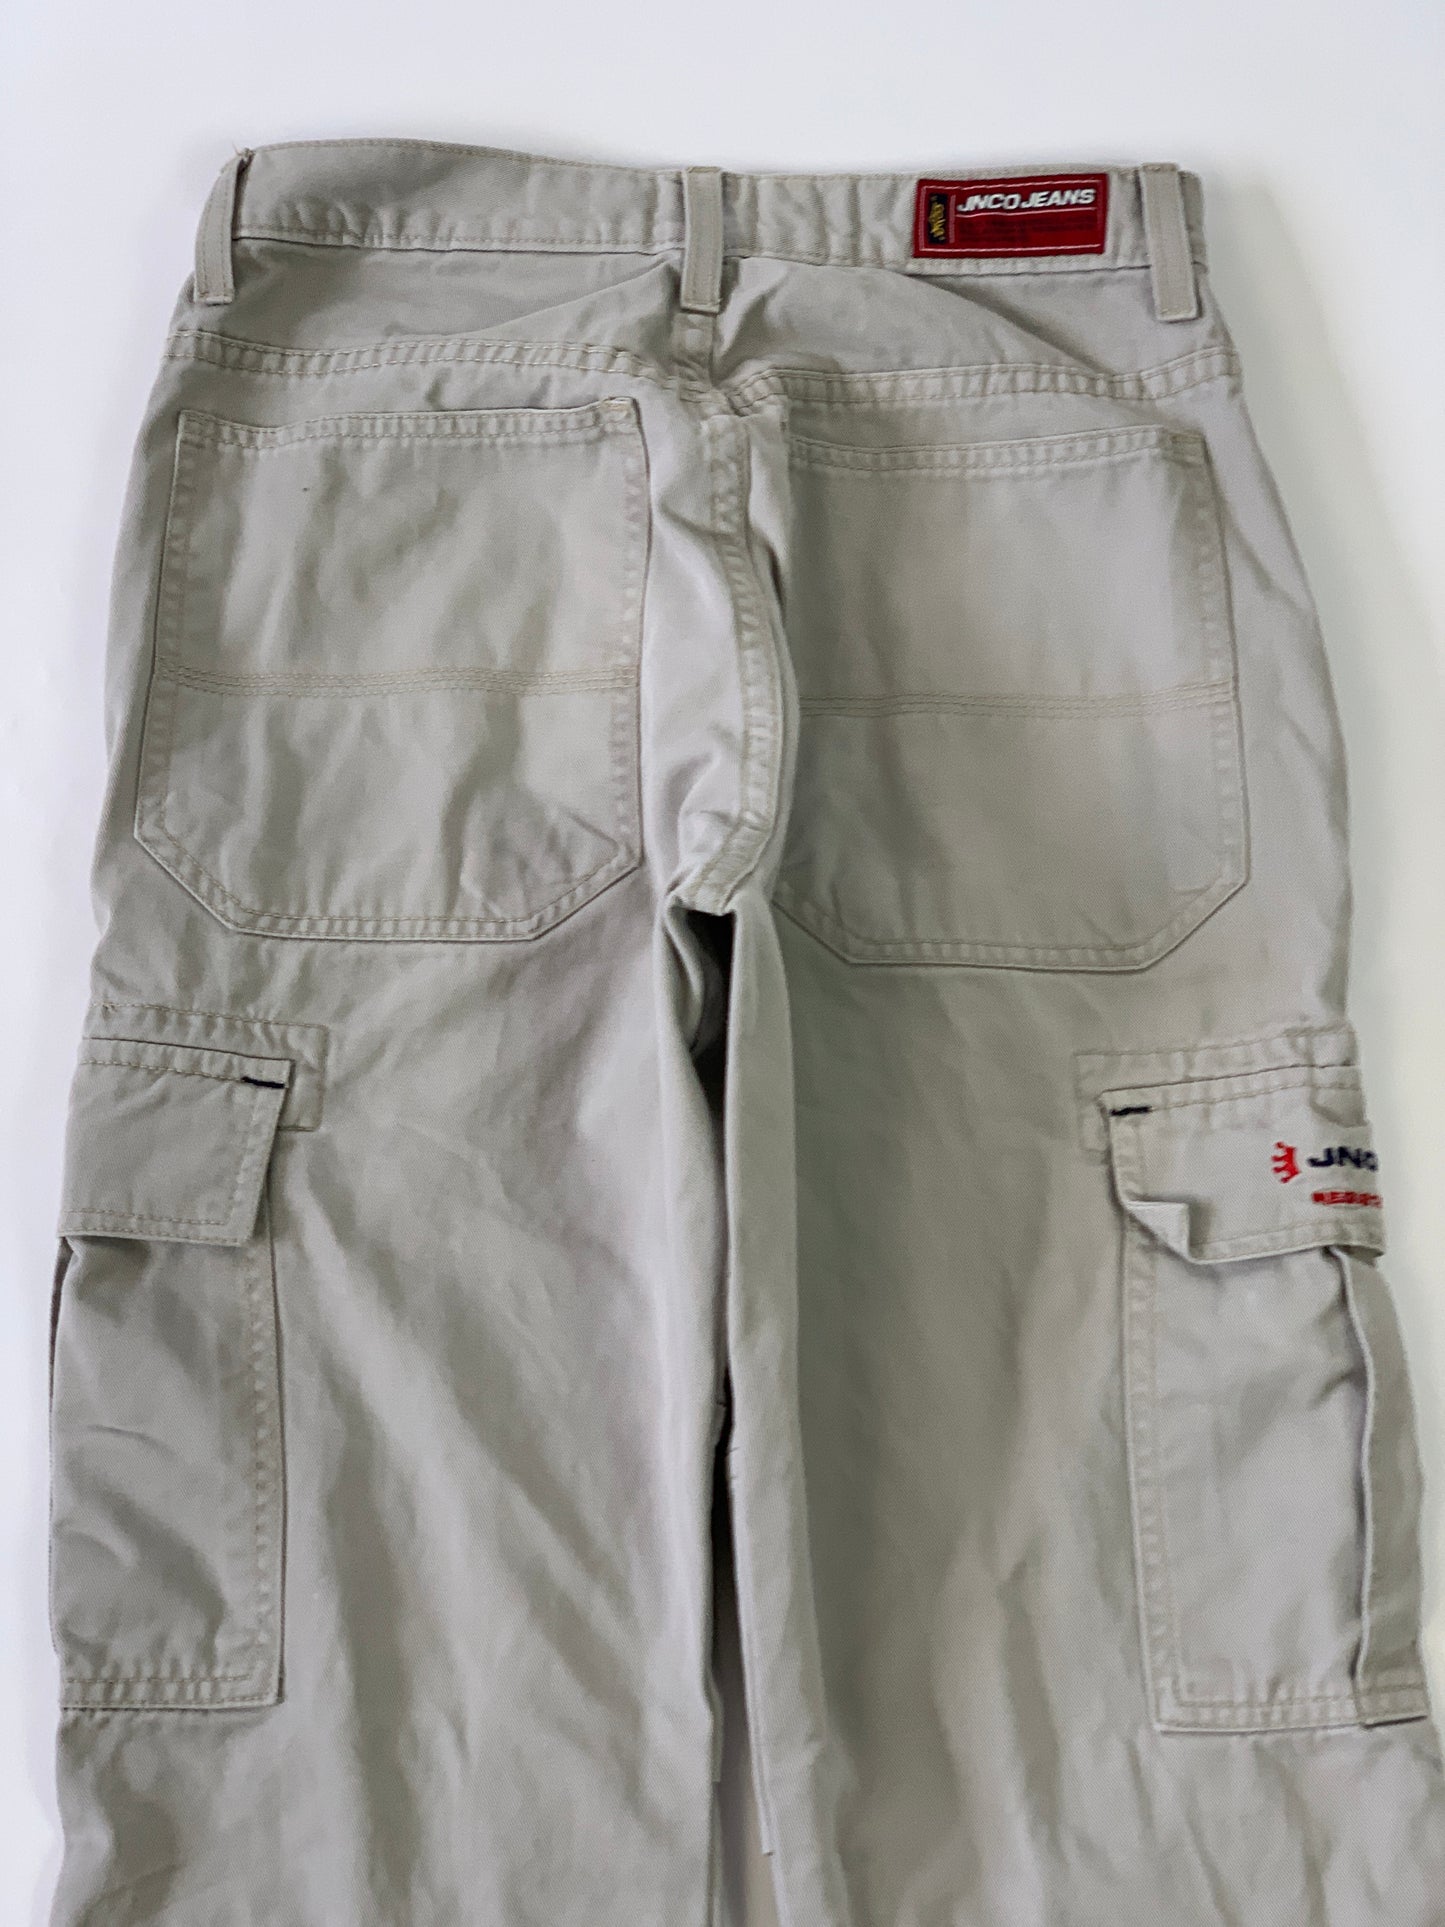 JNCO Vintage Cargo Pants - 28